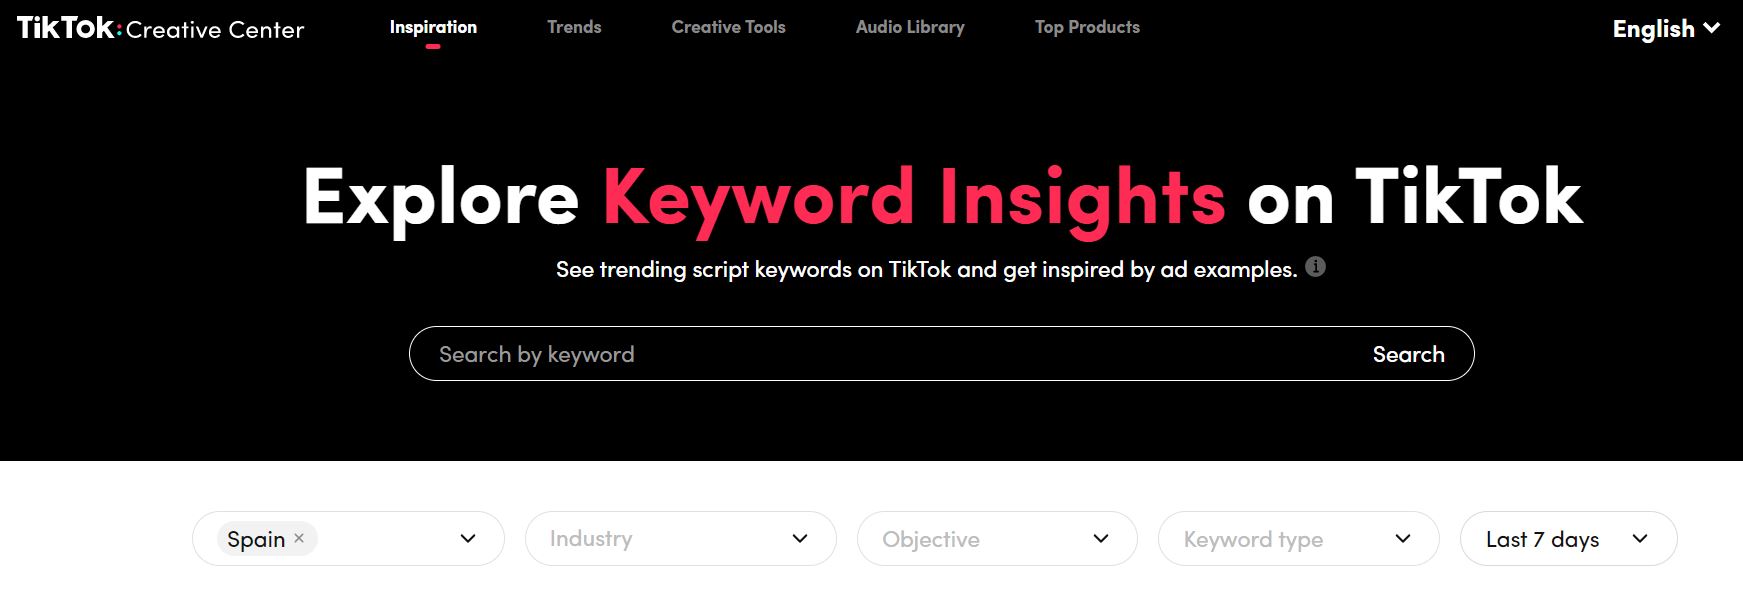 Explore Keyword Insights on TikTok